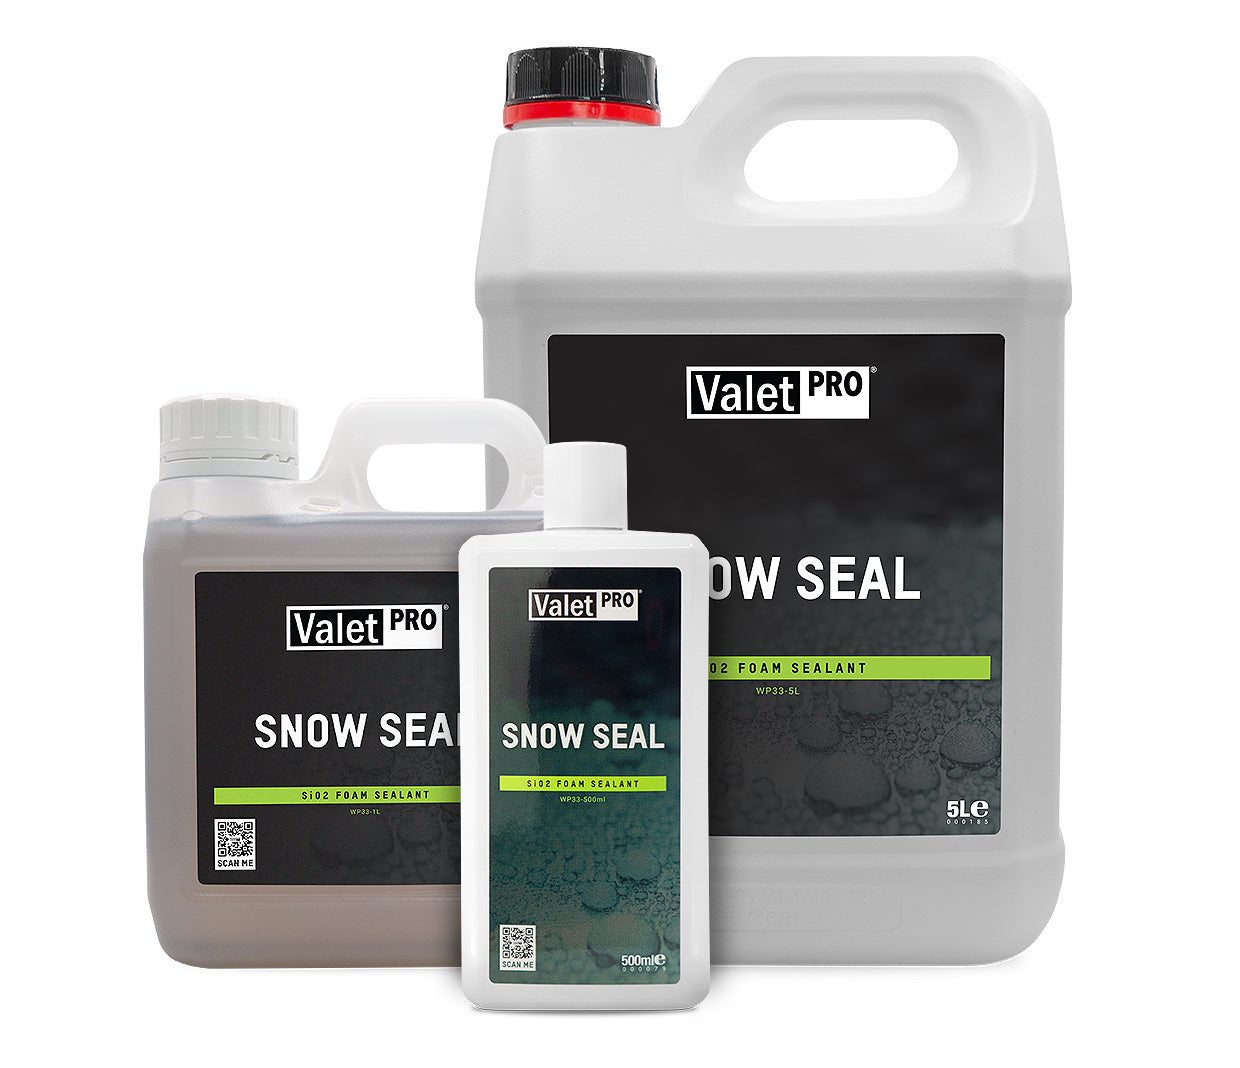 Valet Pro - Snow Seal Si02 Foam Sealant